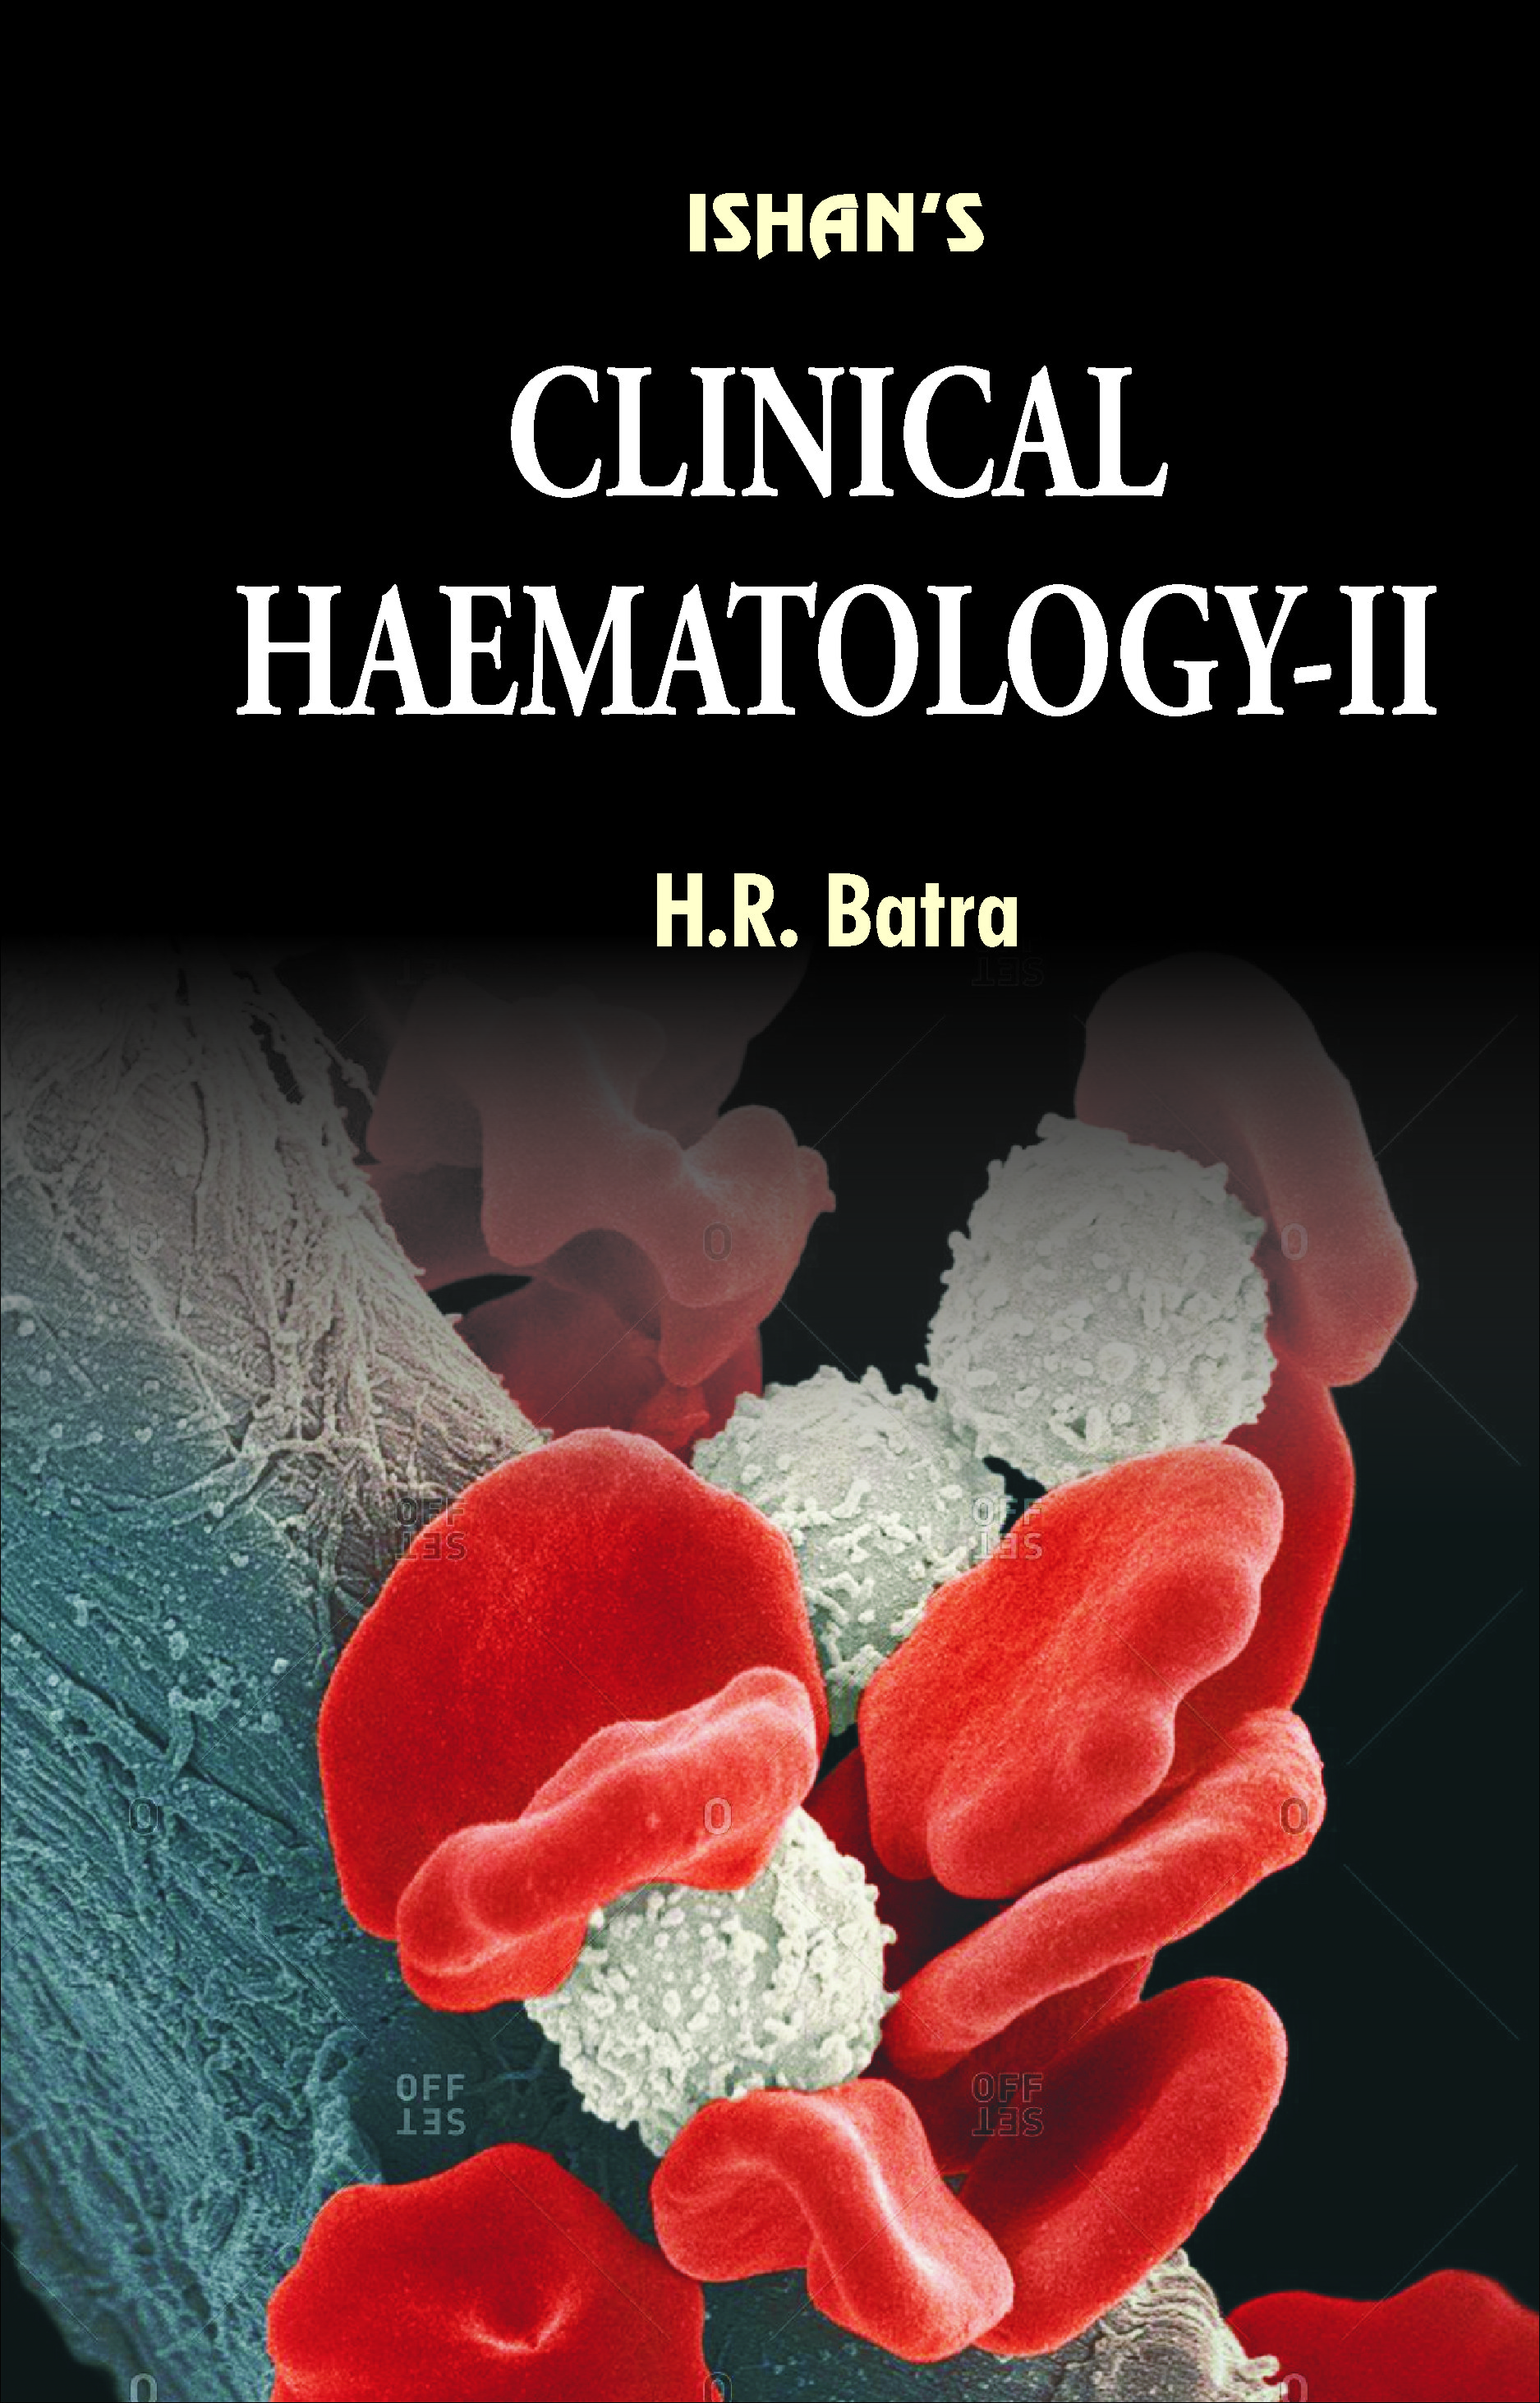 Clinical Haematology-II